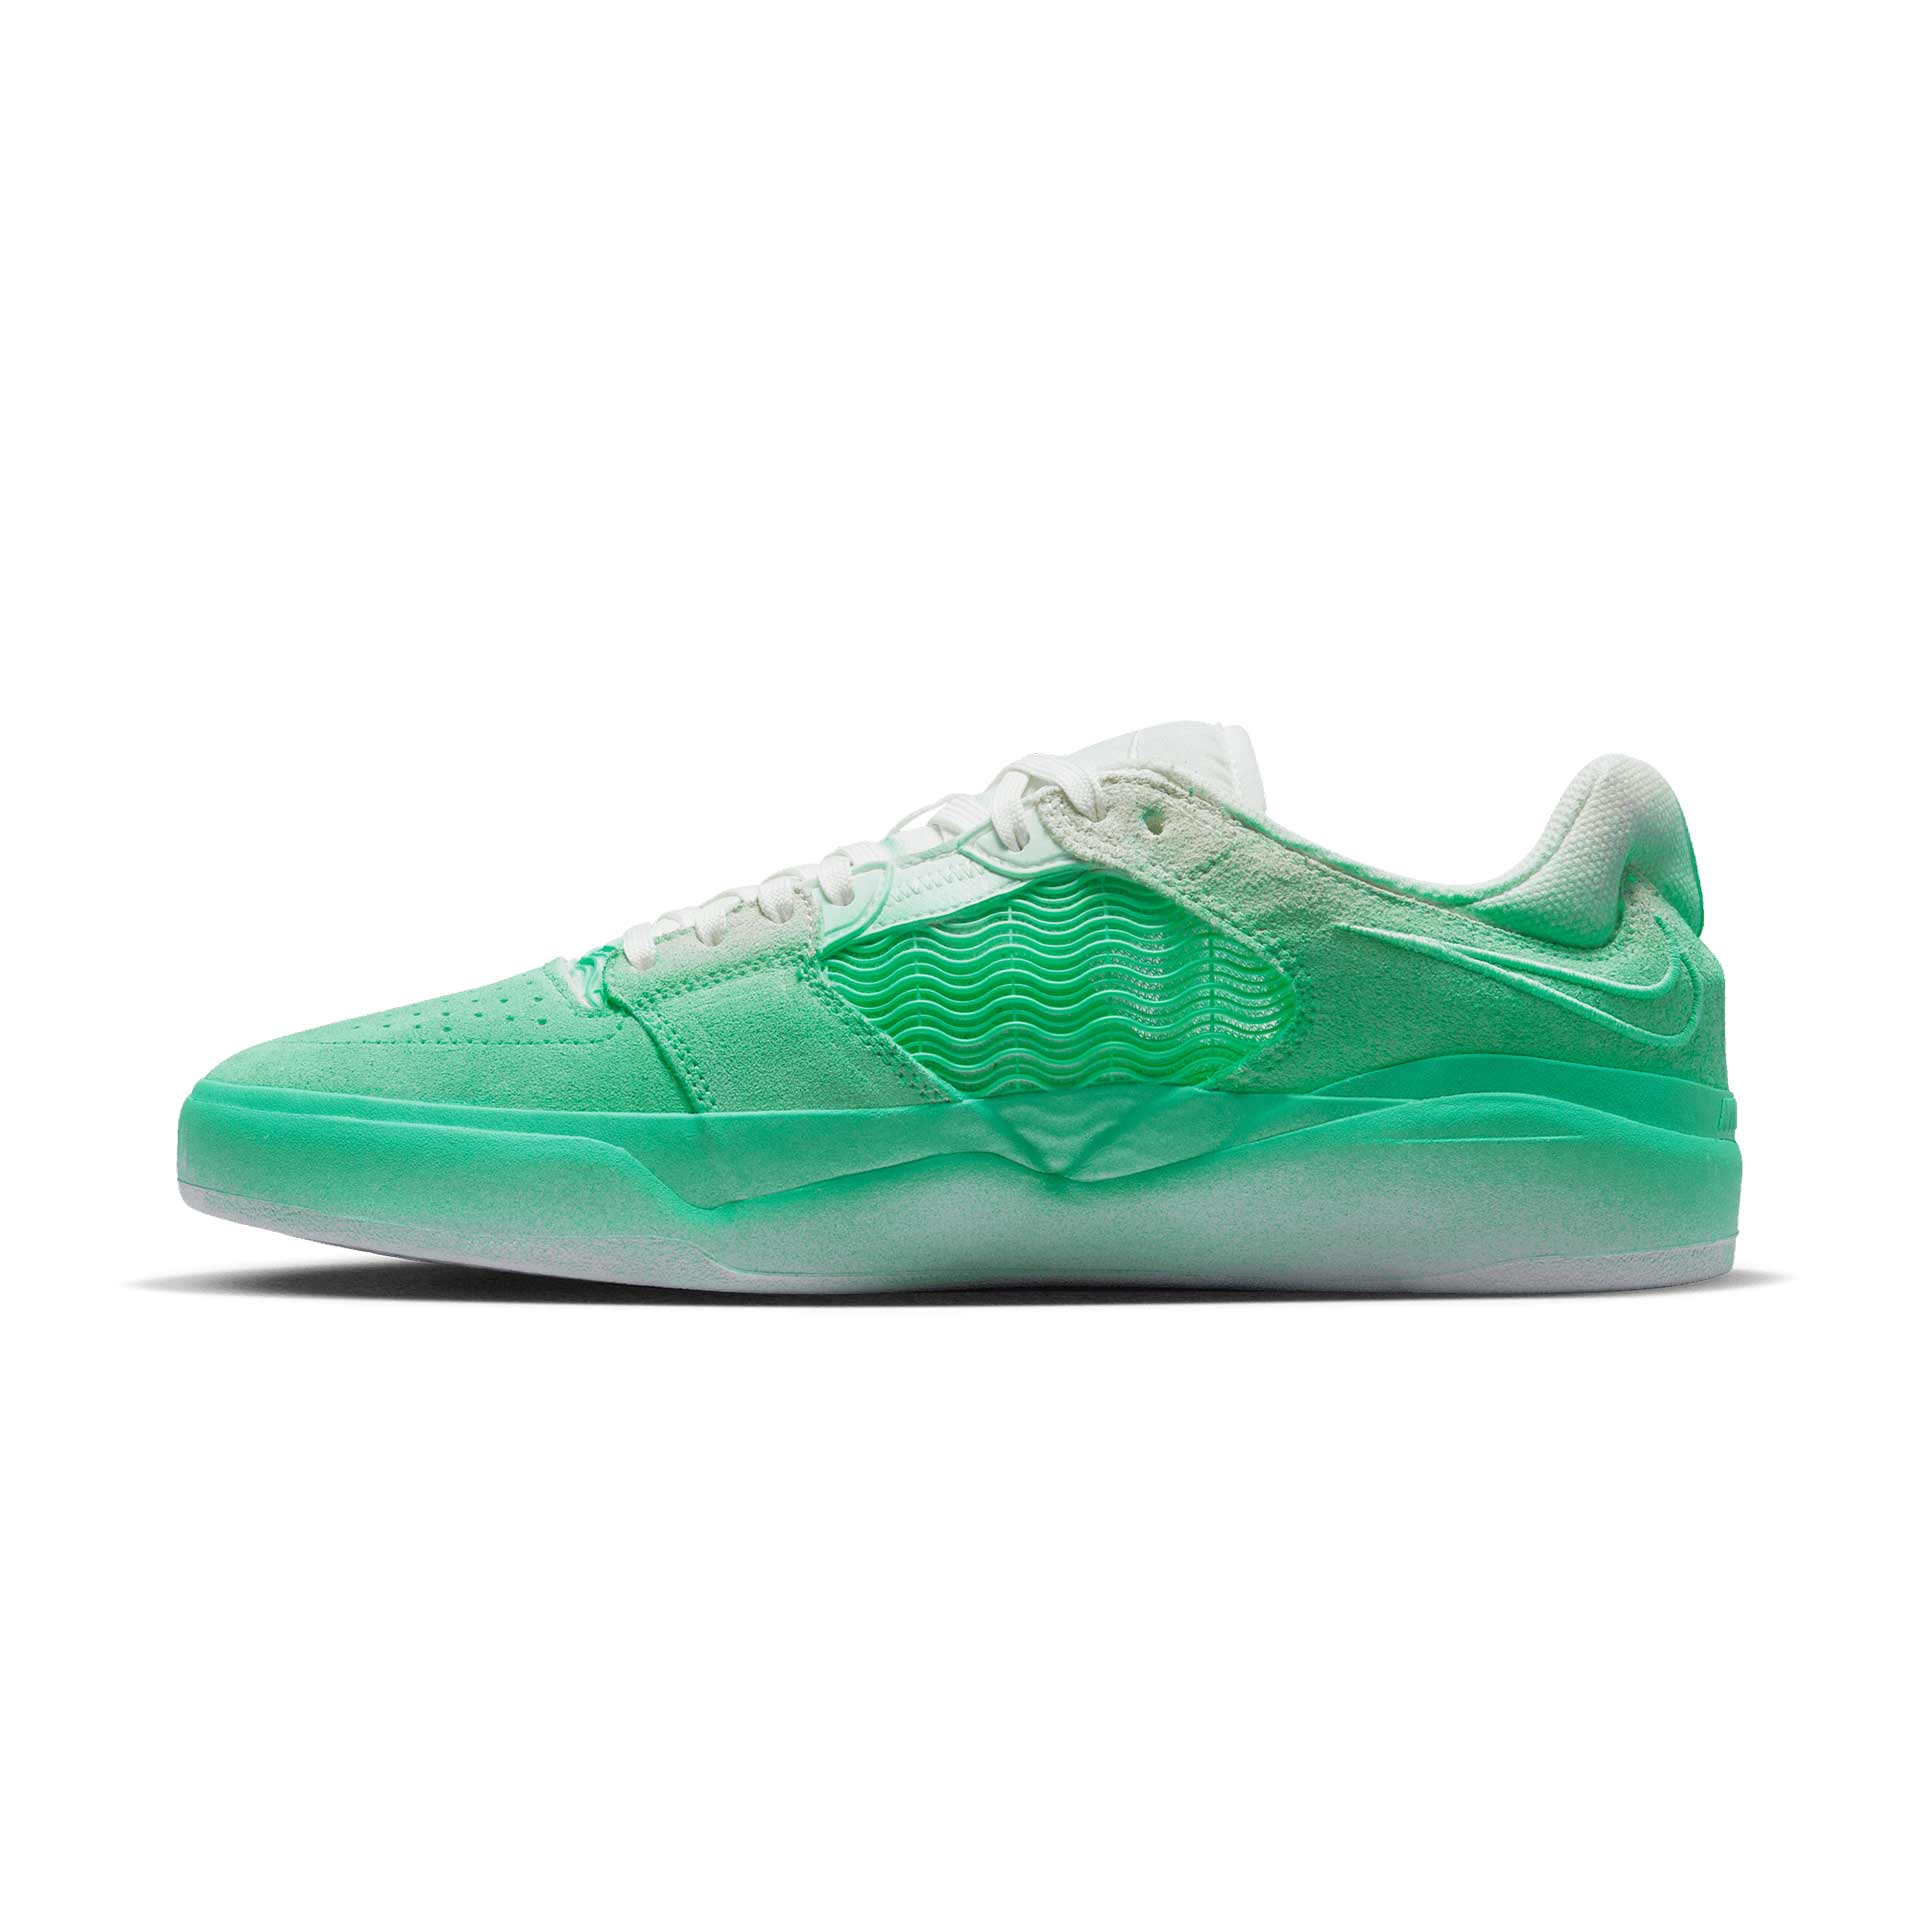 Nike SB Ishod Wair mint green